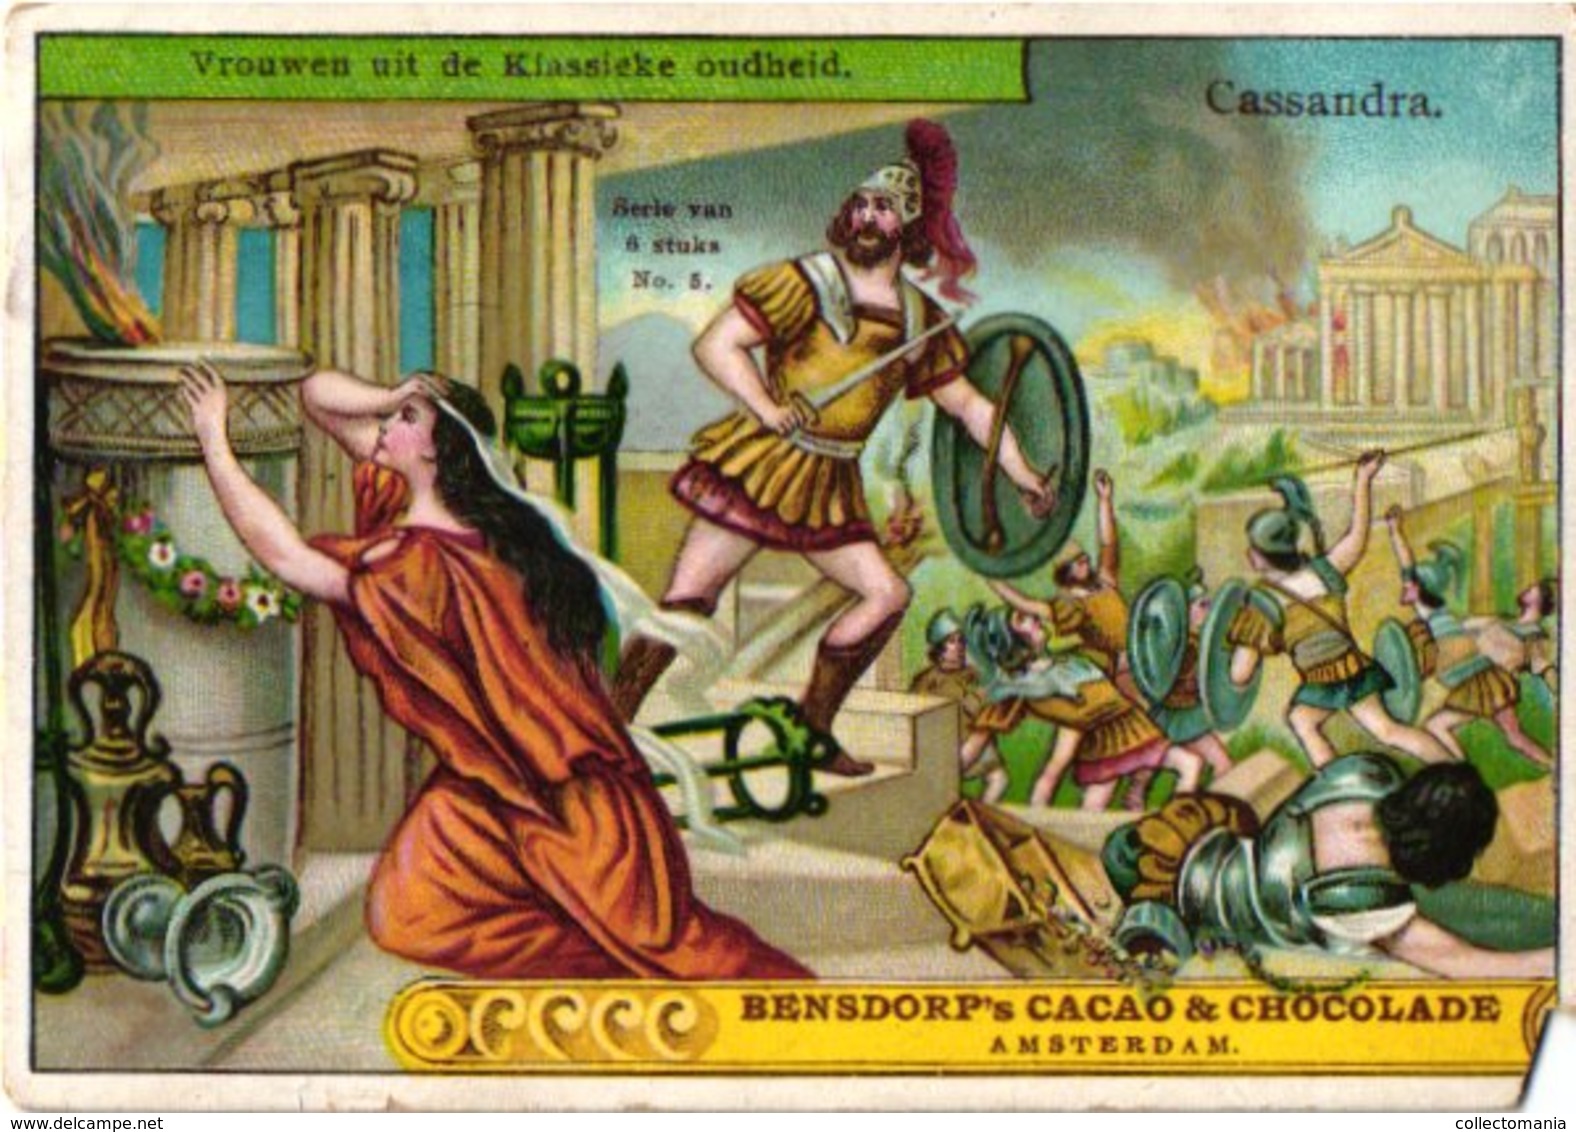 14  chromo litho publiciteit chocolat chokolade BENSDORP, losse reklame plaatjes uit reeksen rond 1890 à 1900